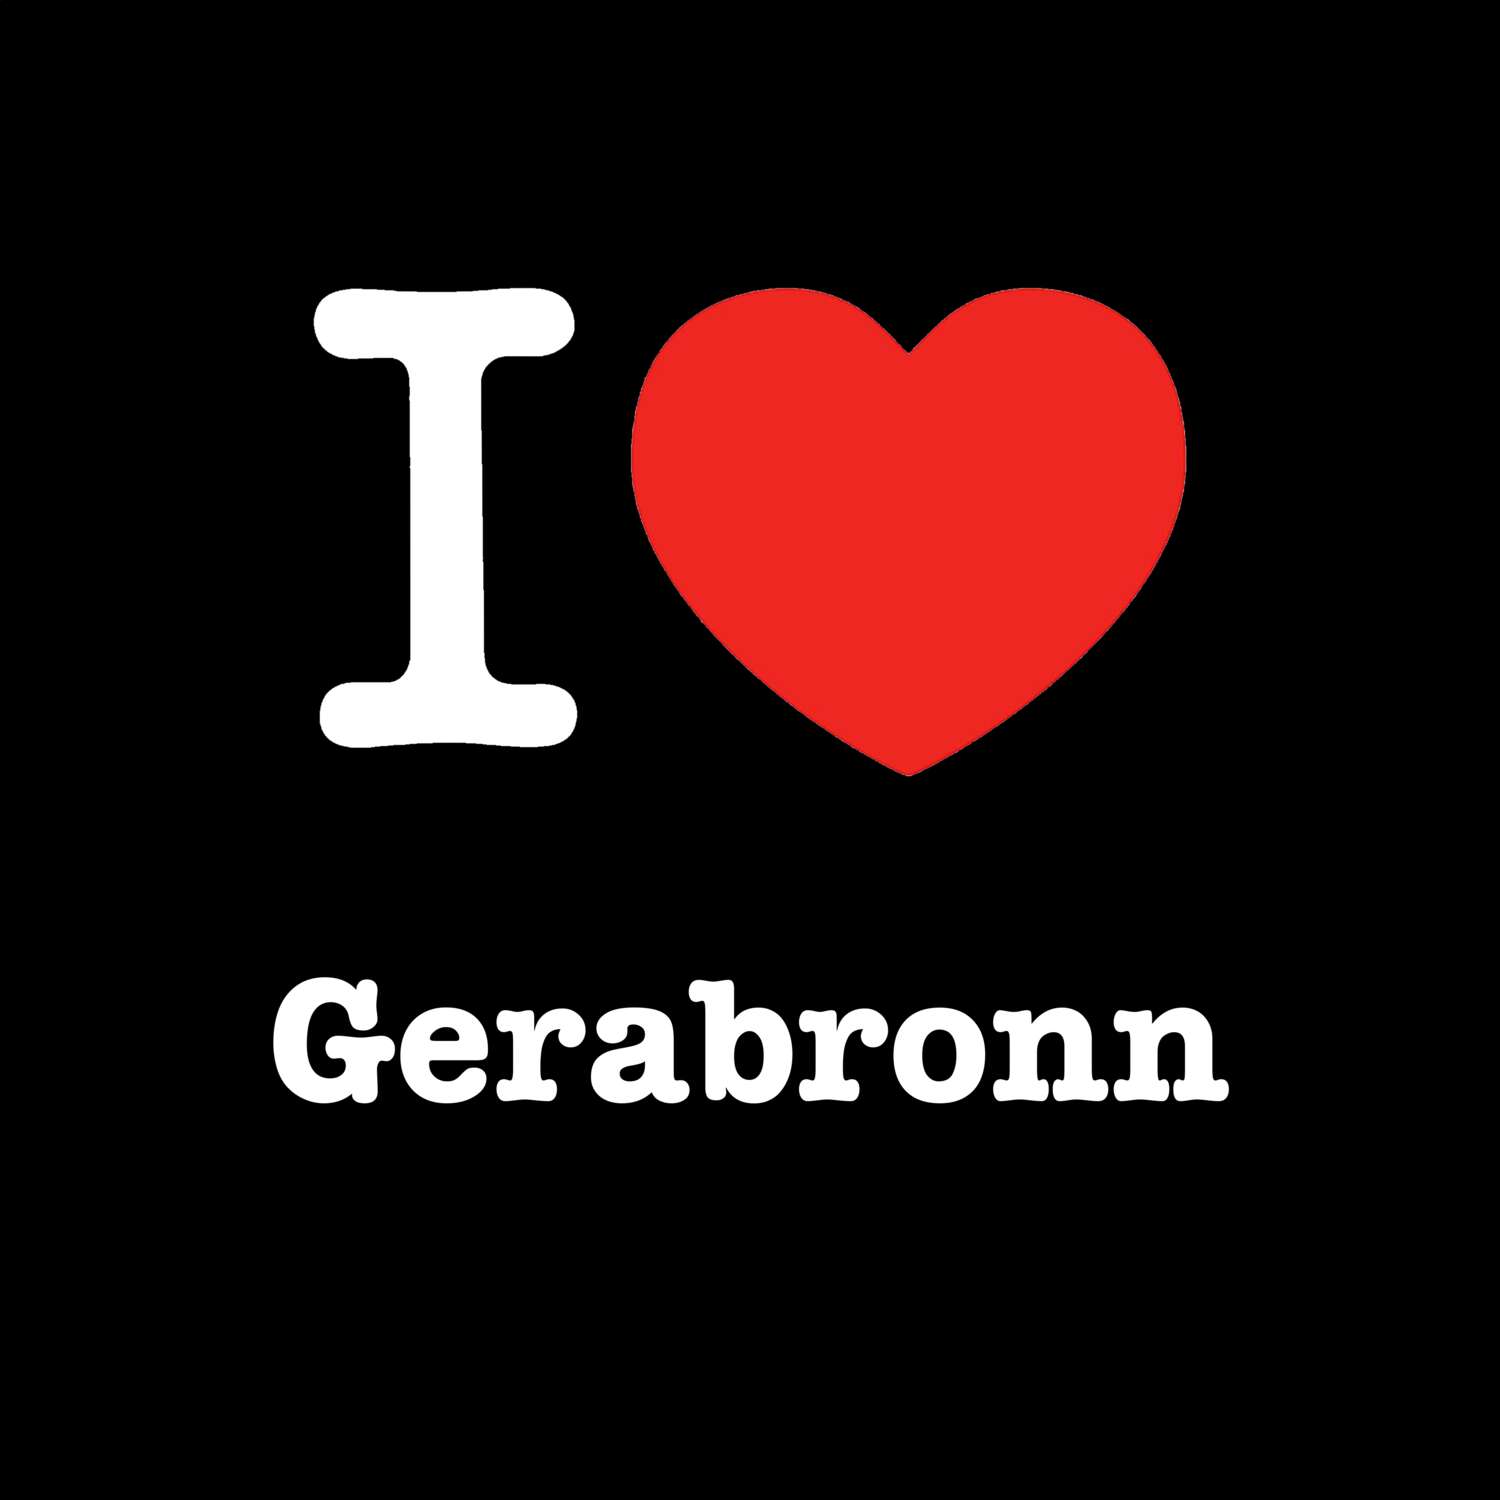 Gerabronn T-Shirt »I love«